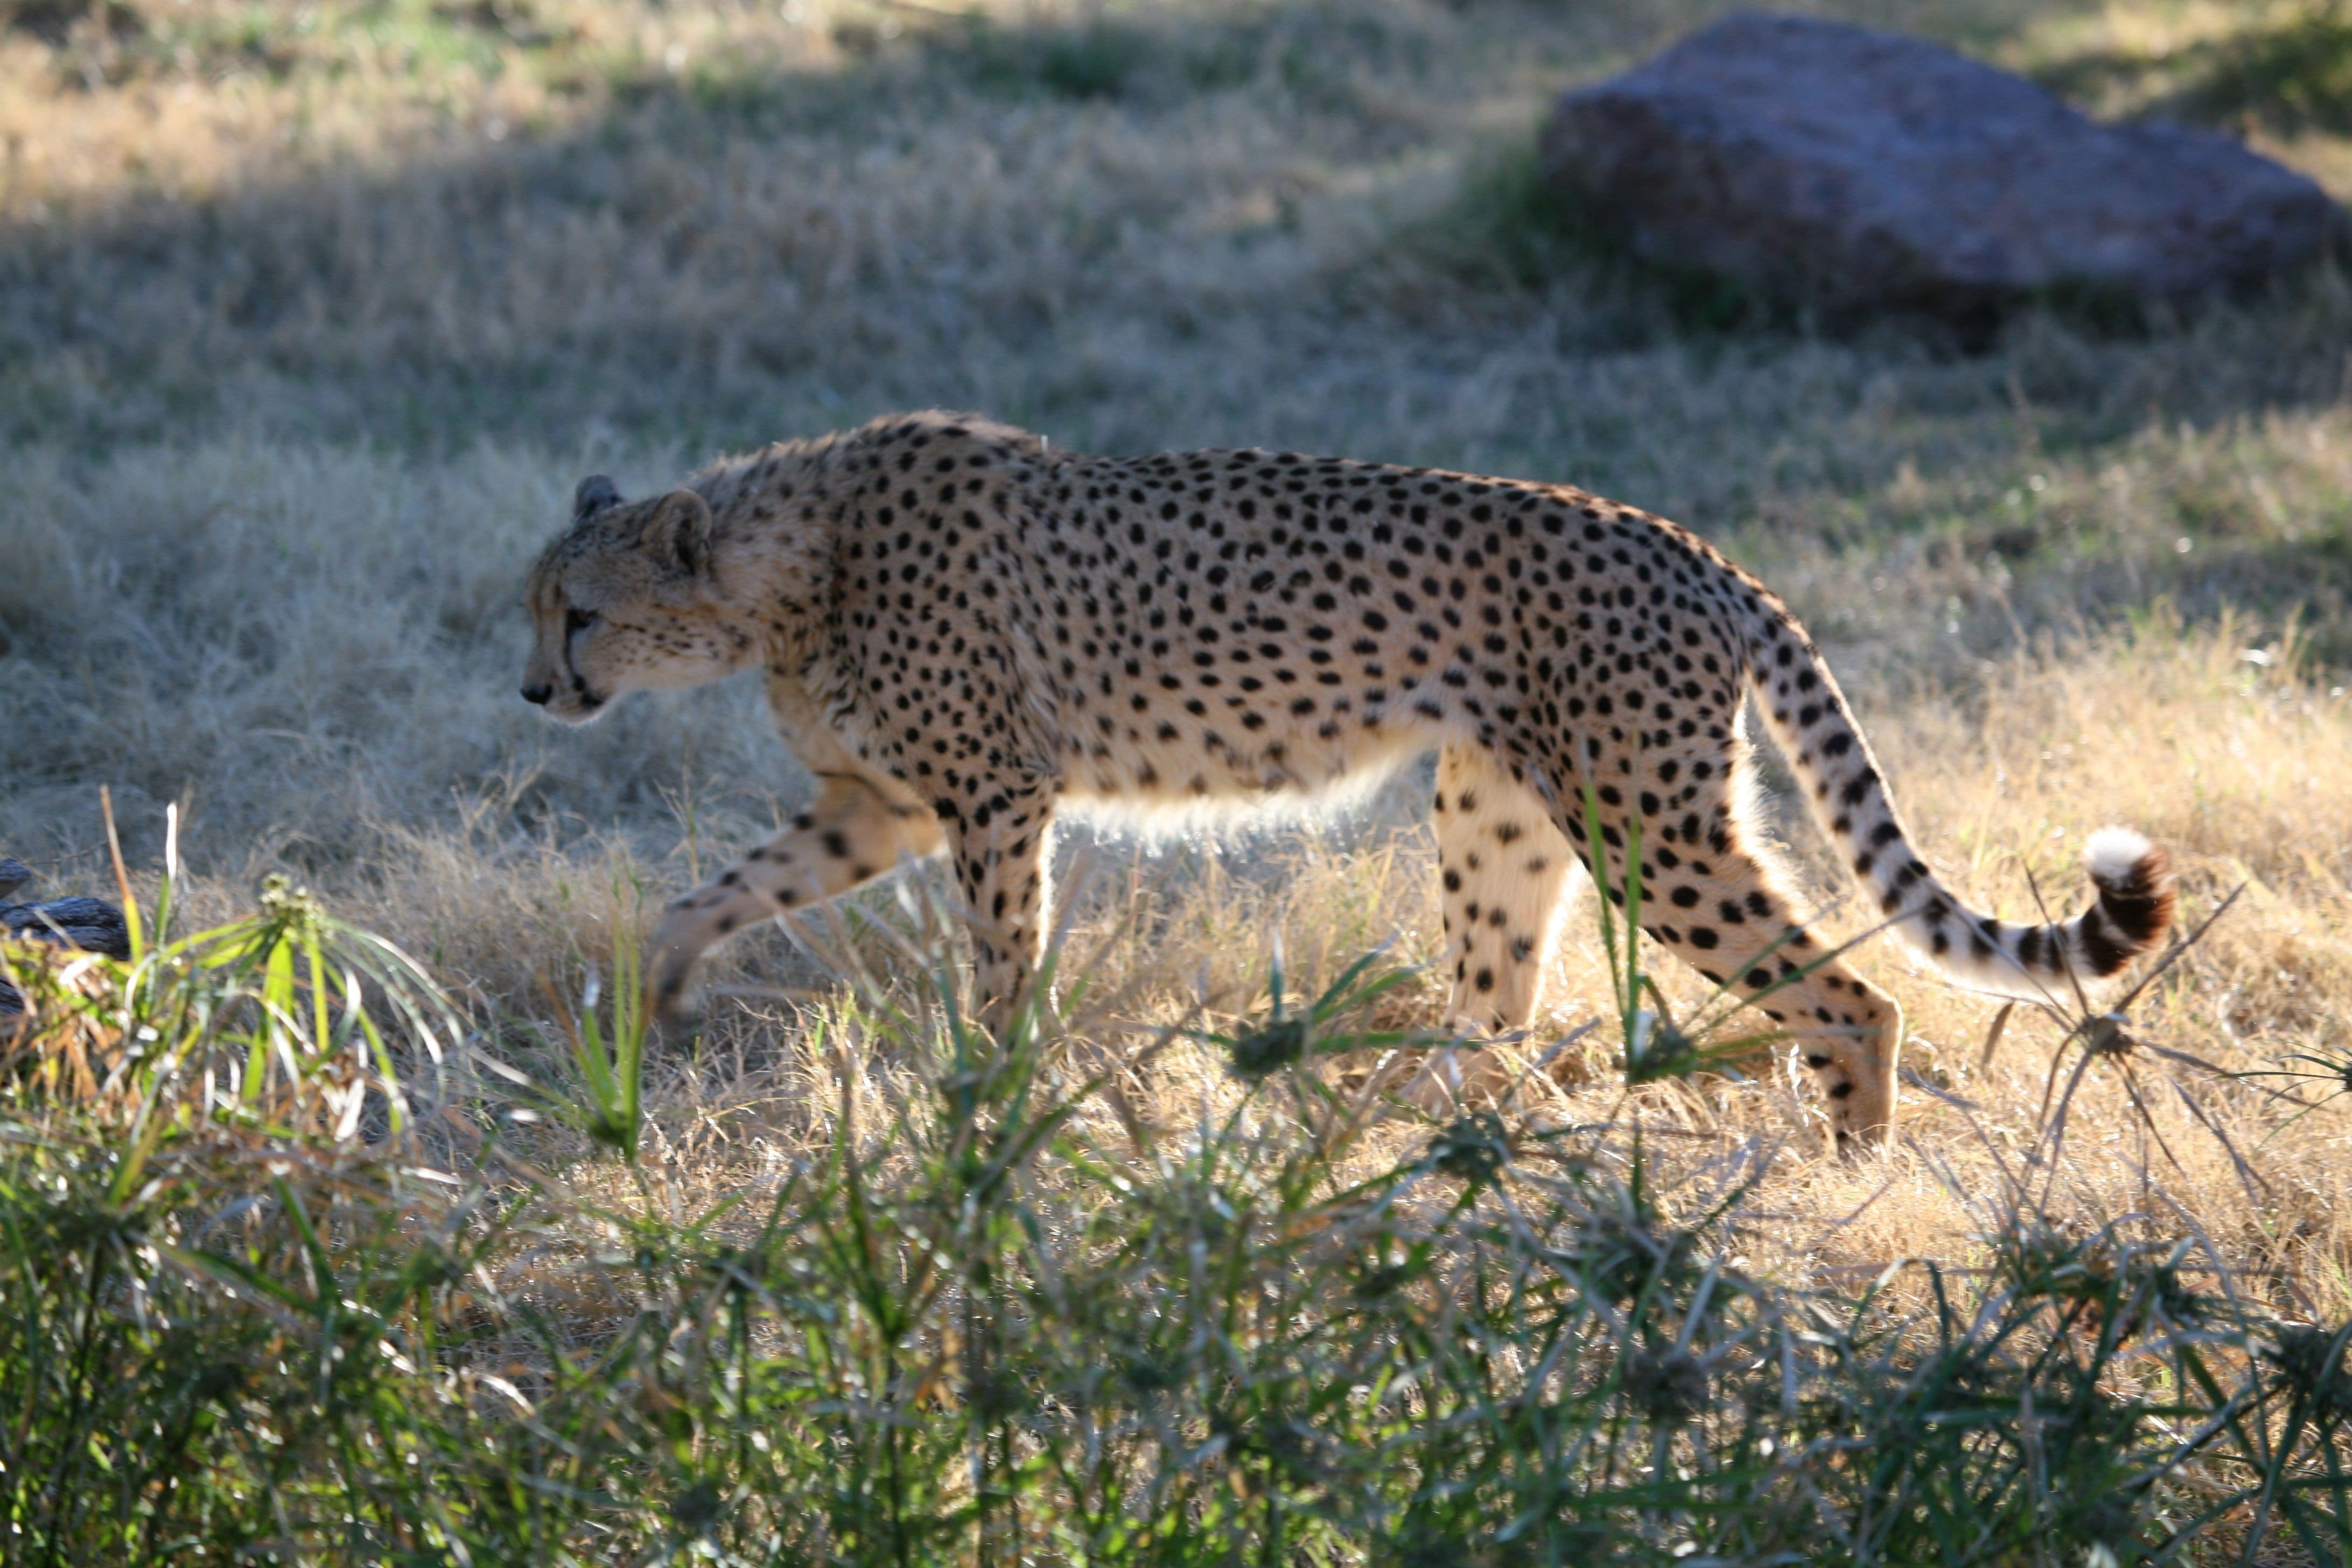 A beautiful cheetah walks among the bush on the savanna.